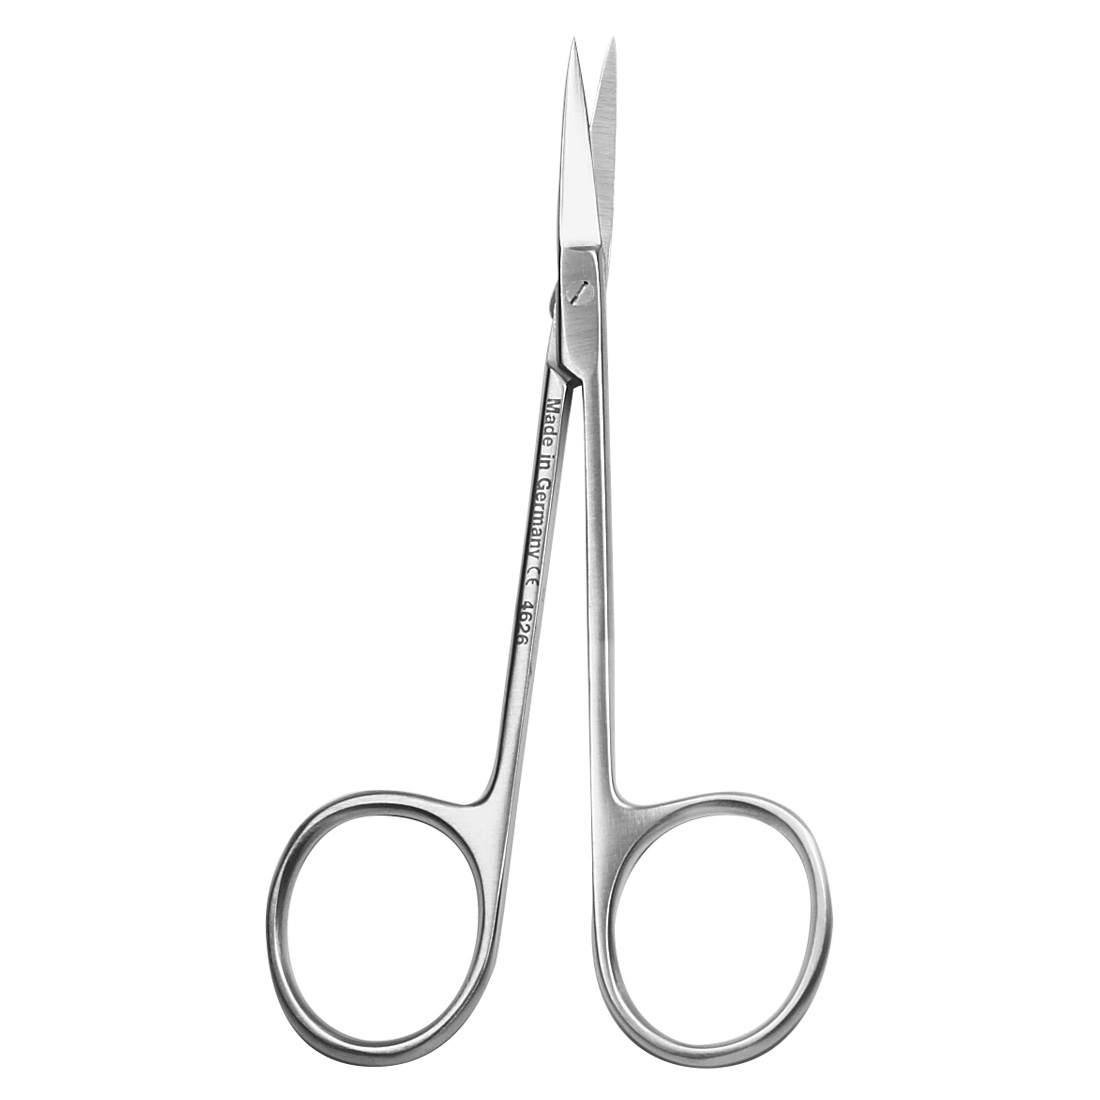 ACE Iris Scissors, straight, delicate, super cut tips